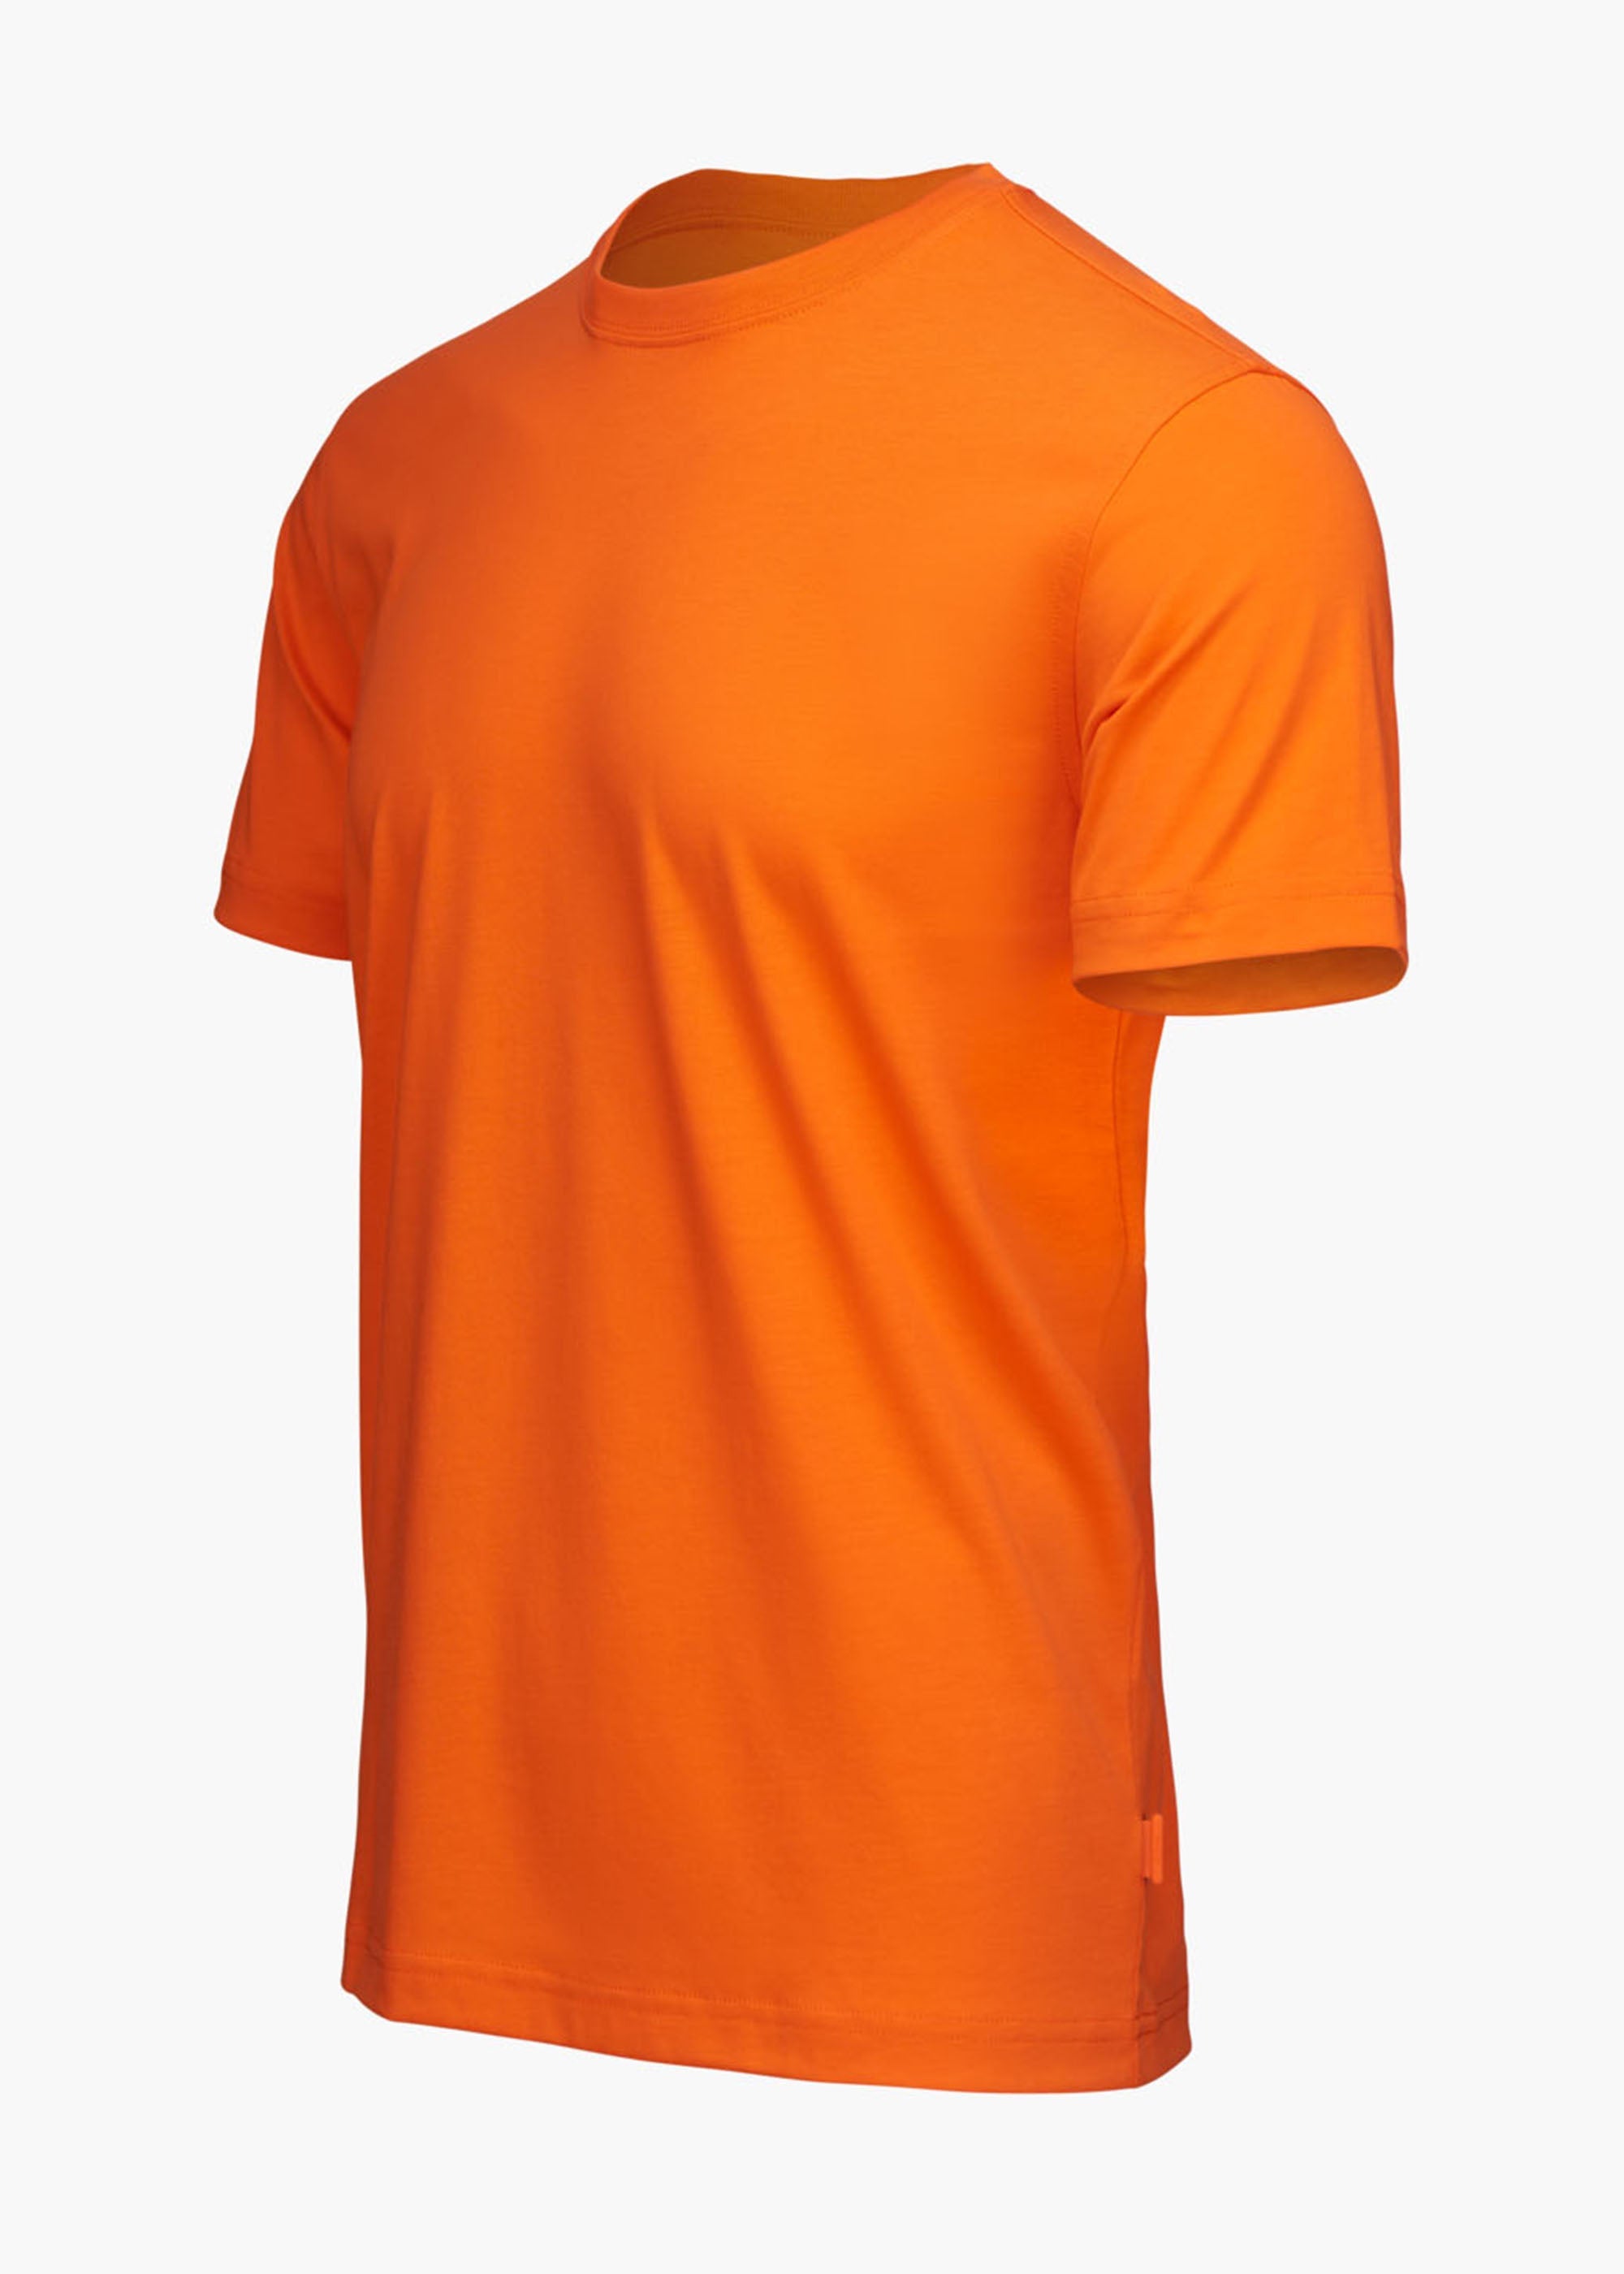 Aksla T Shirt - background::white,variant::SWIMS Orange